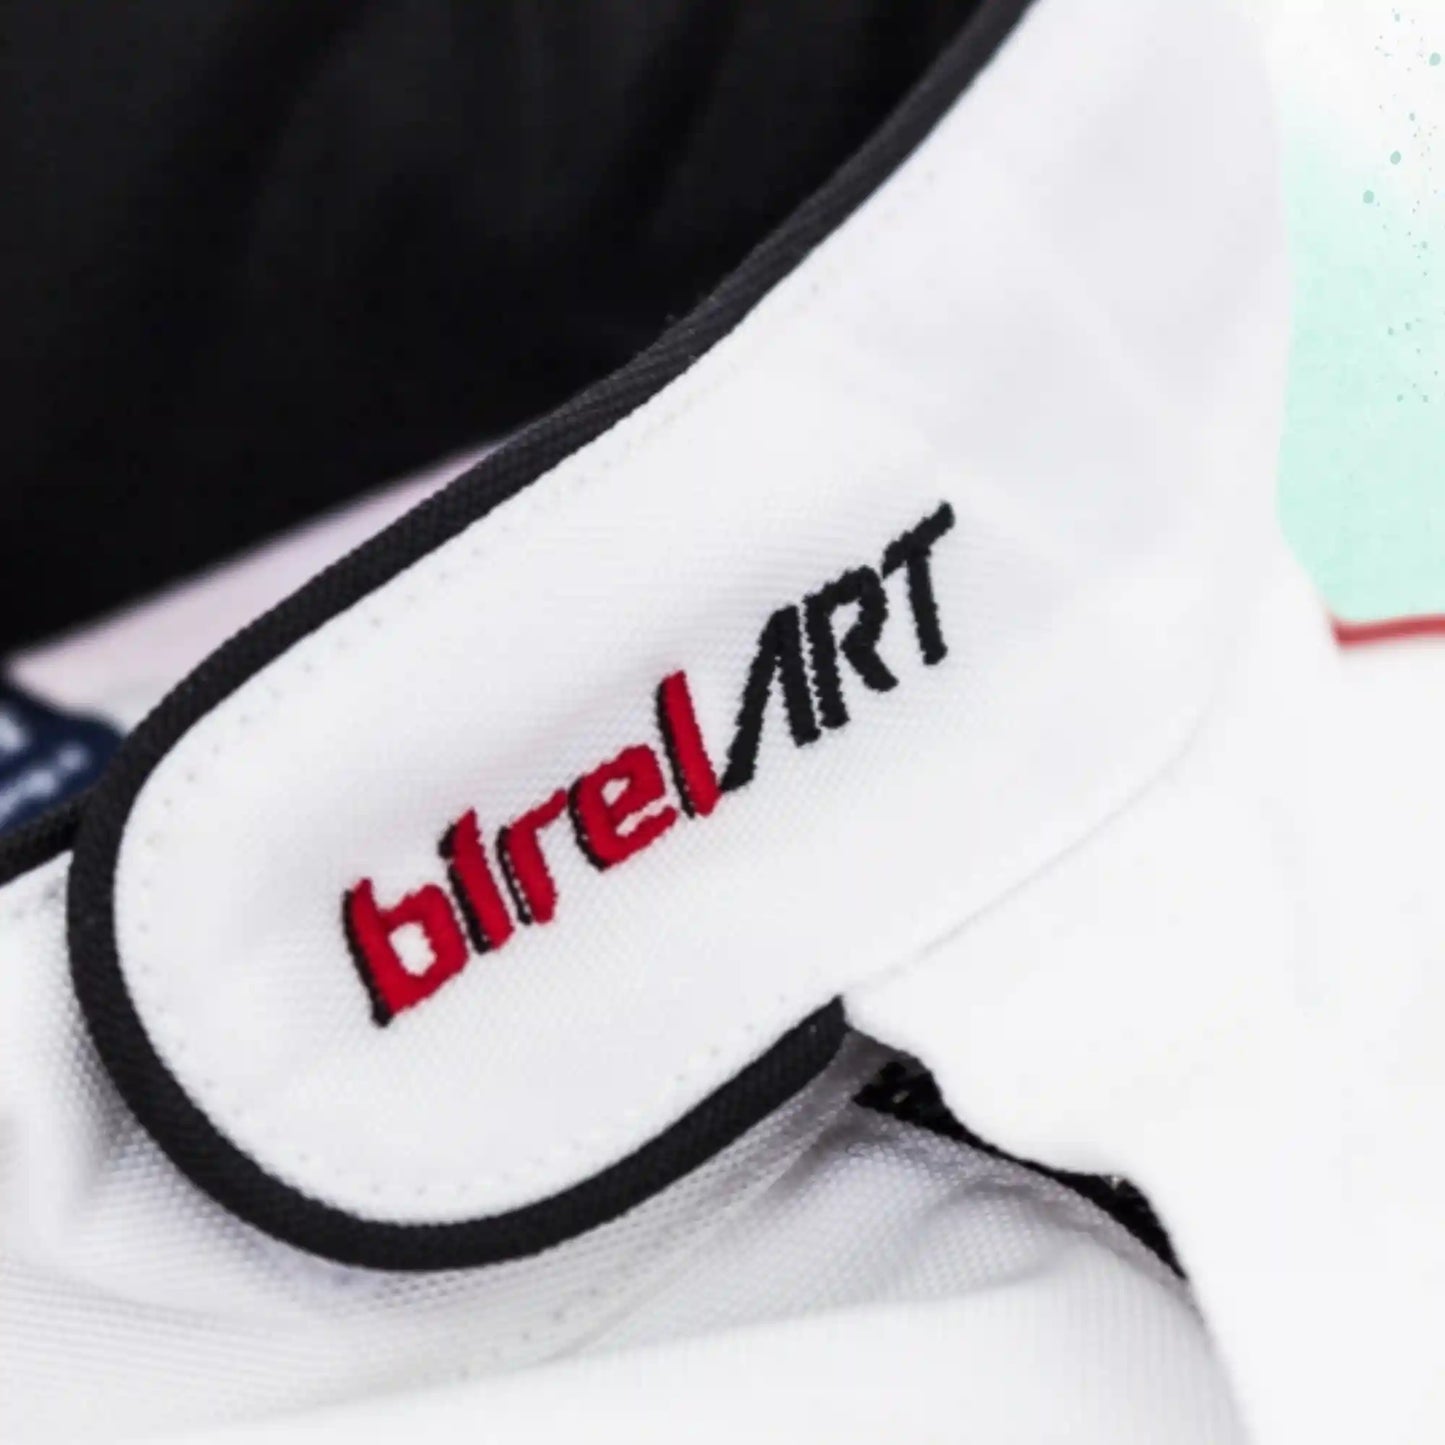 2021 PSL Birel ART Go Kart Overall Racing Suit Sublimation Printed